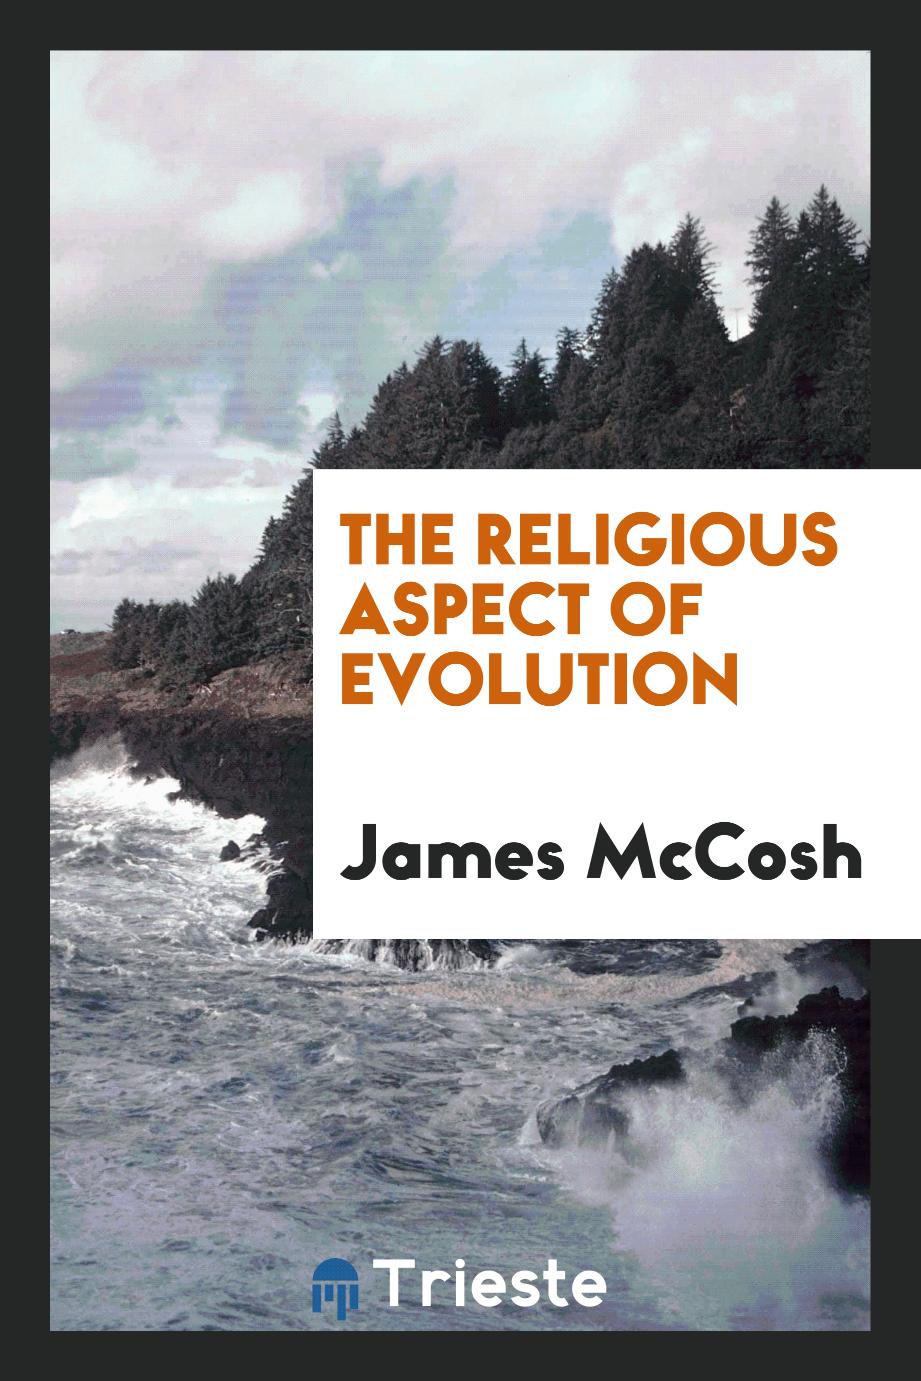 The Religious Aspect of Evolution